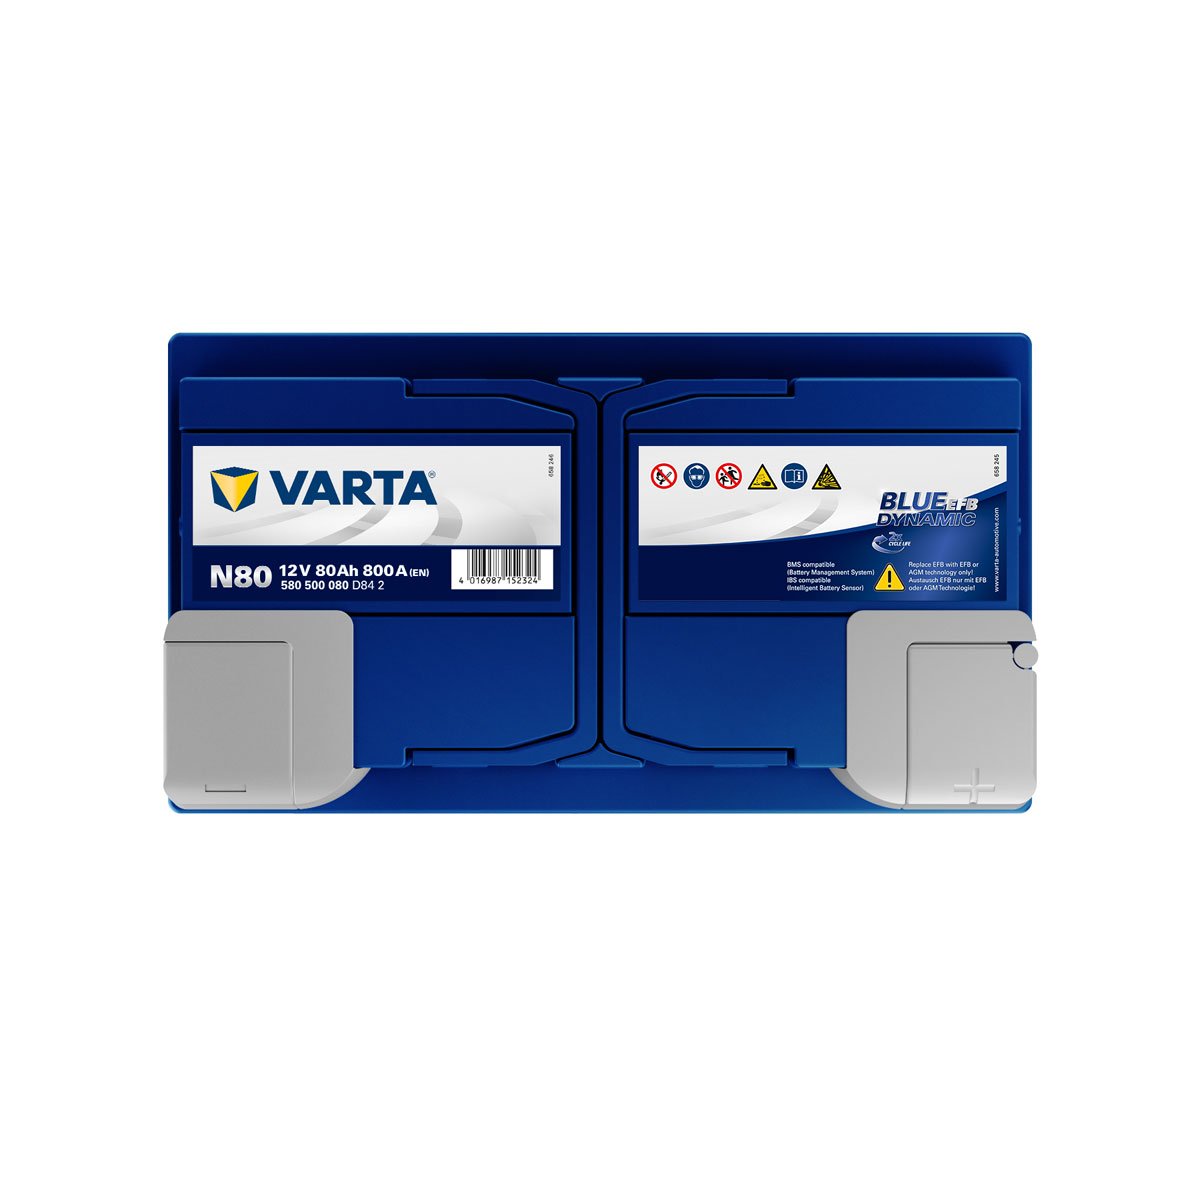 Varta Blue Dynamic N80, 800